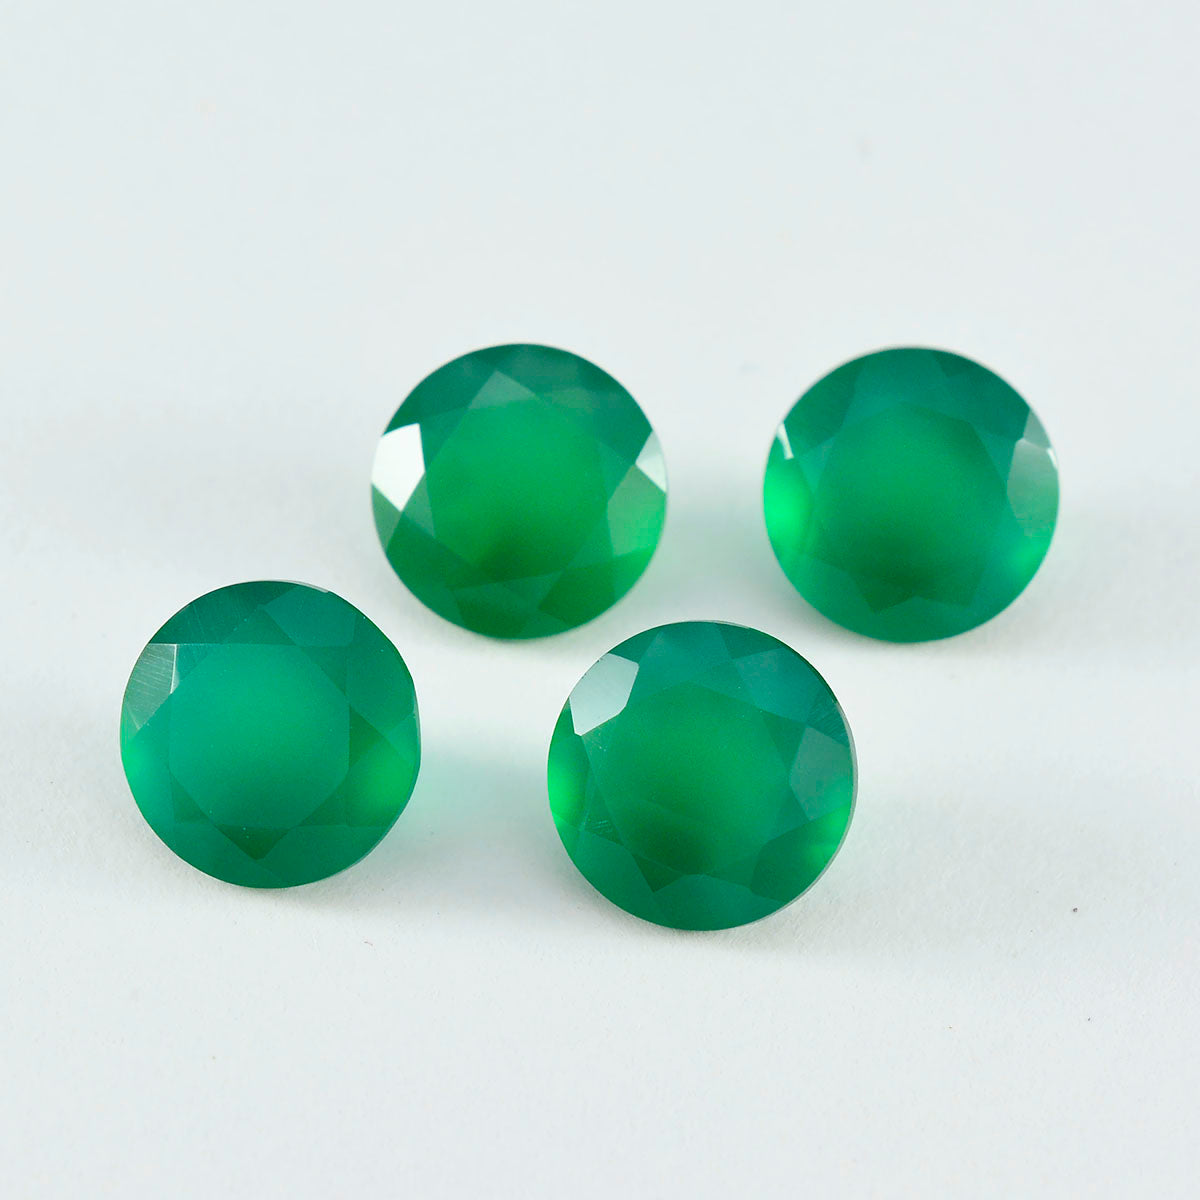 Riyogems 1PC echte groene onyx gefacetteerd 7x7 mm ronde vorm mooie kwaliteit steen